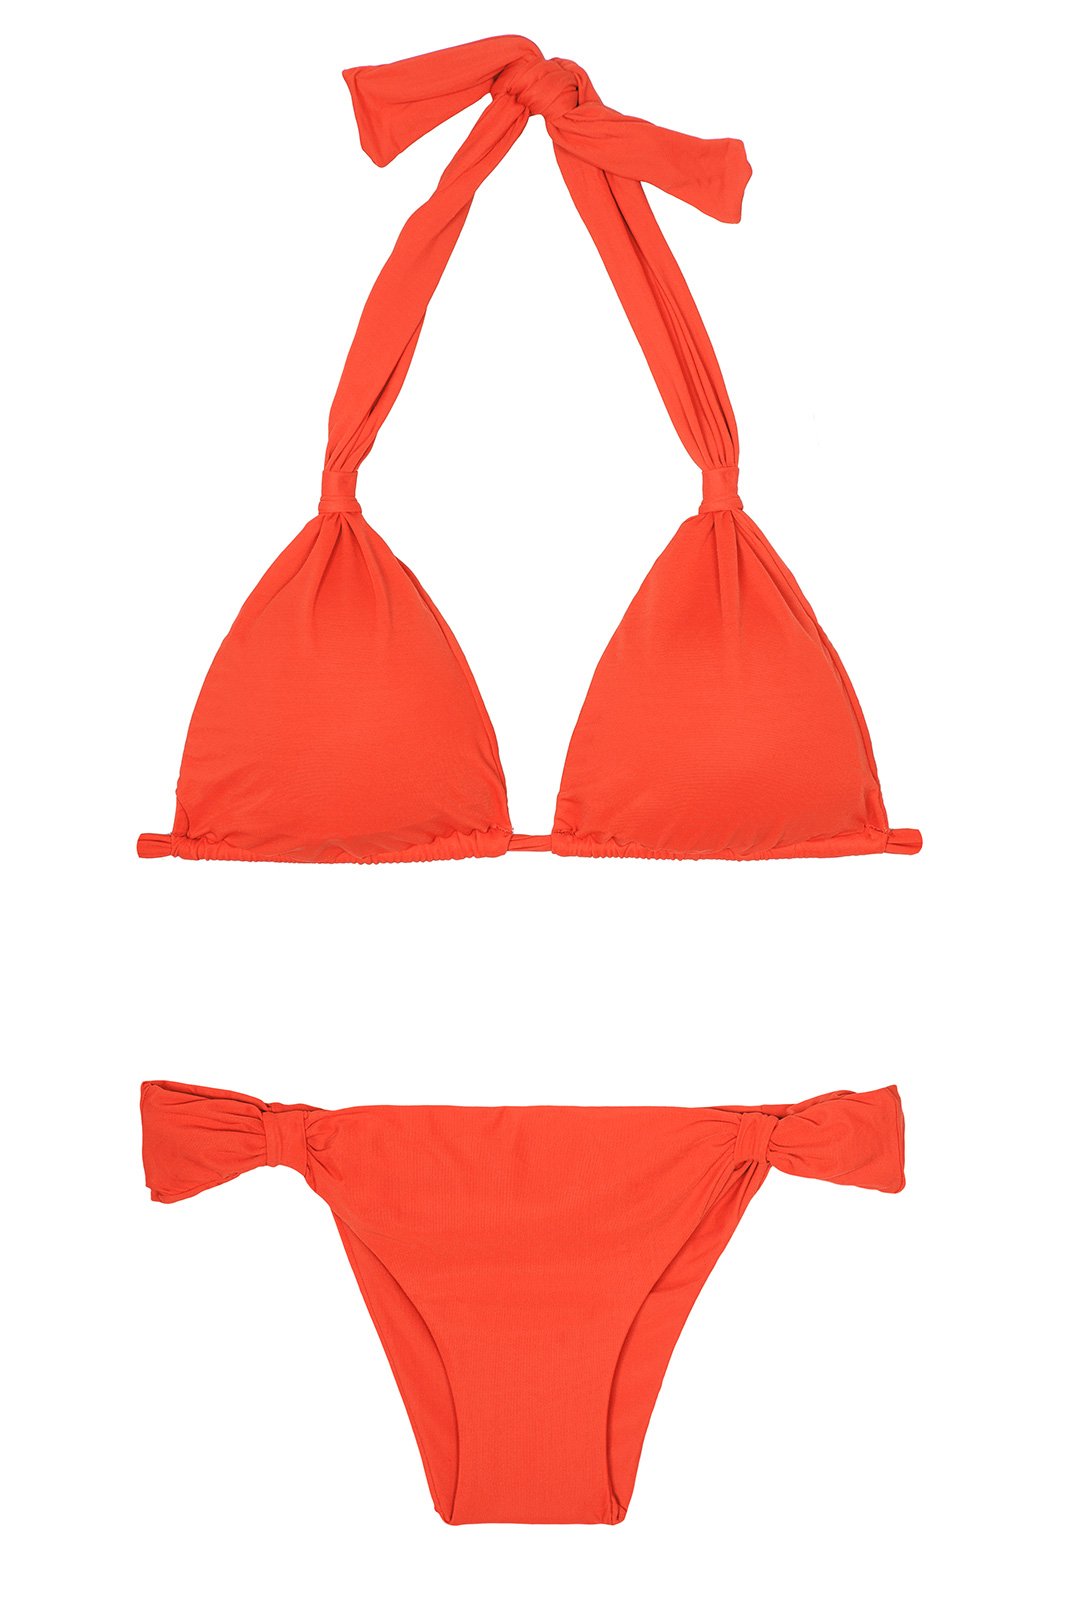 Red Triangle Halter Top Bikini, Low-cut Bottoms - Ambra Mel Urucum ...